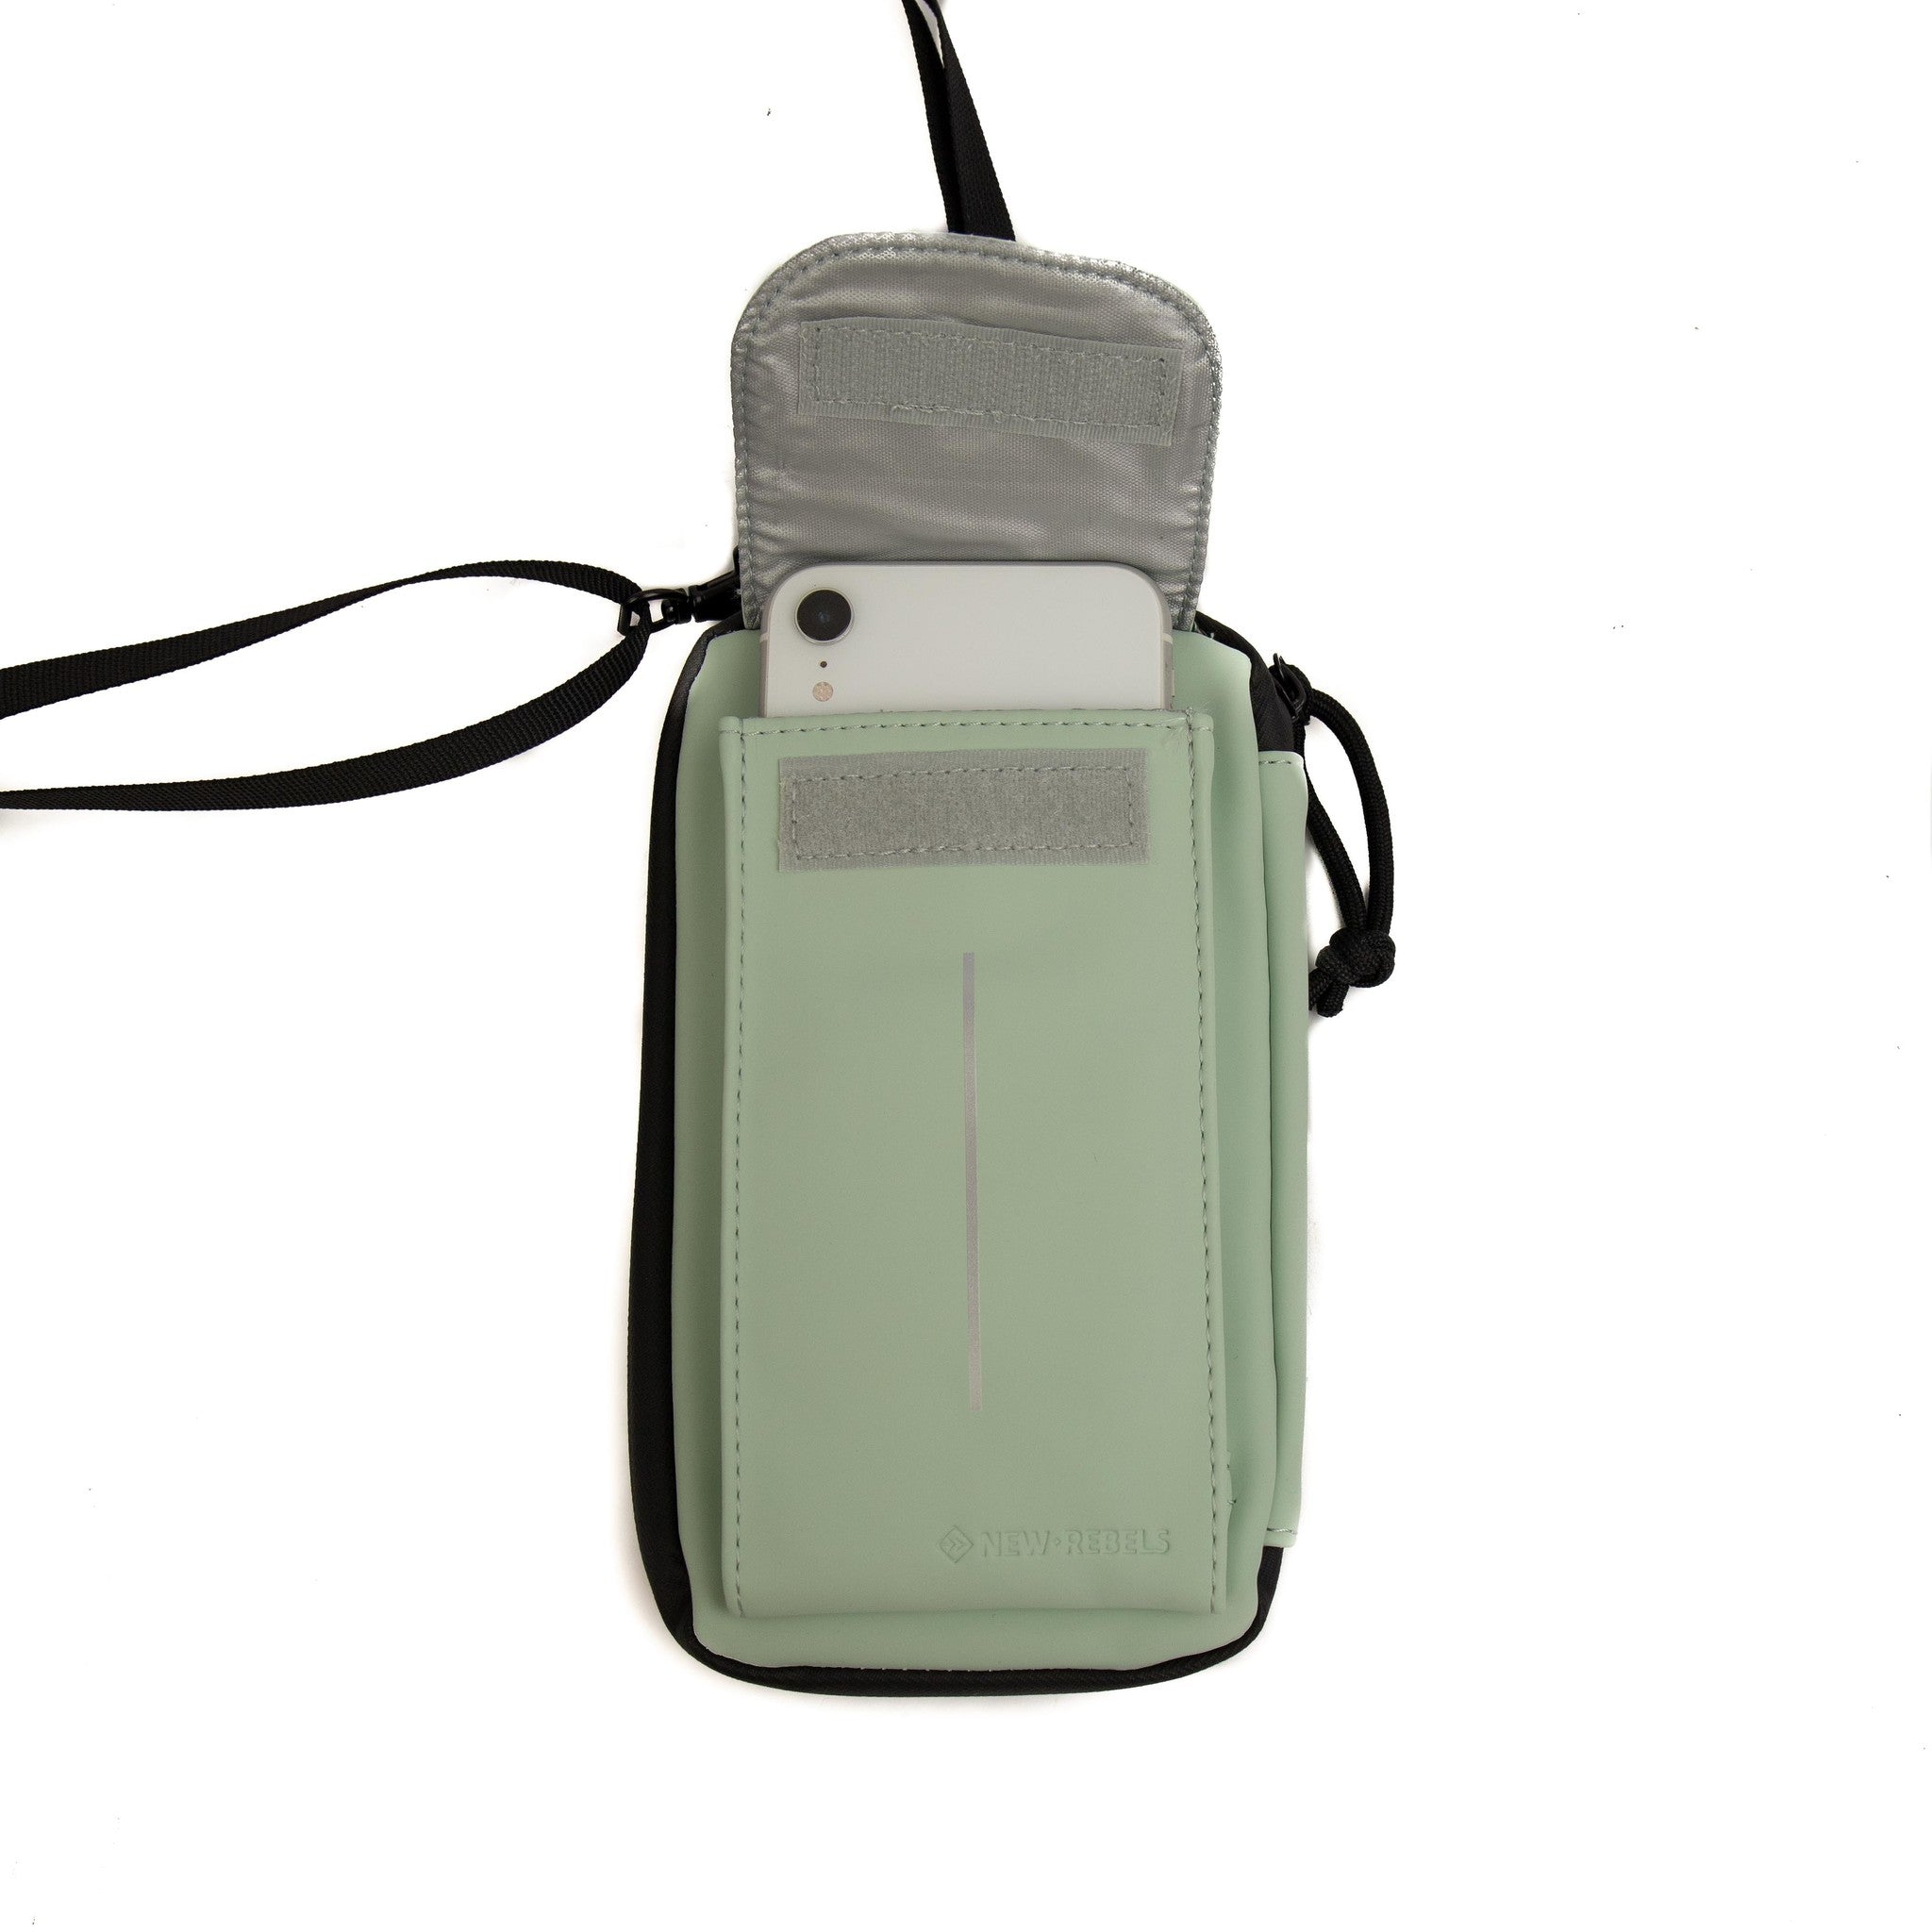 Phone bag 'Mart' olive green